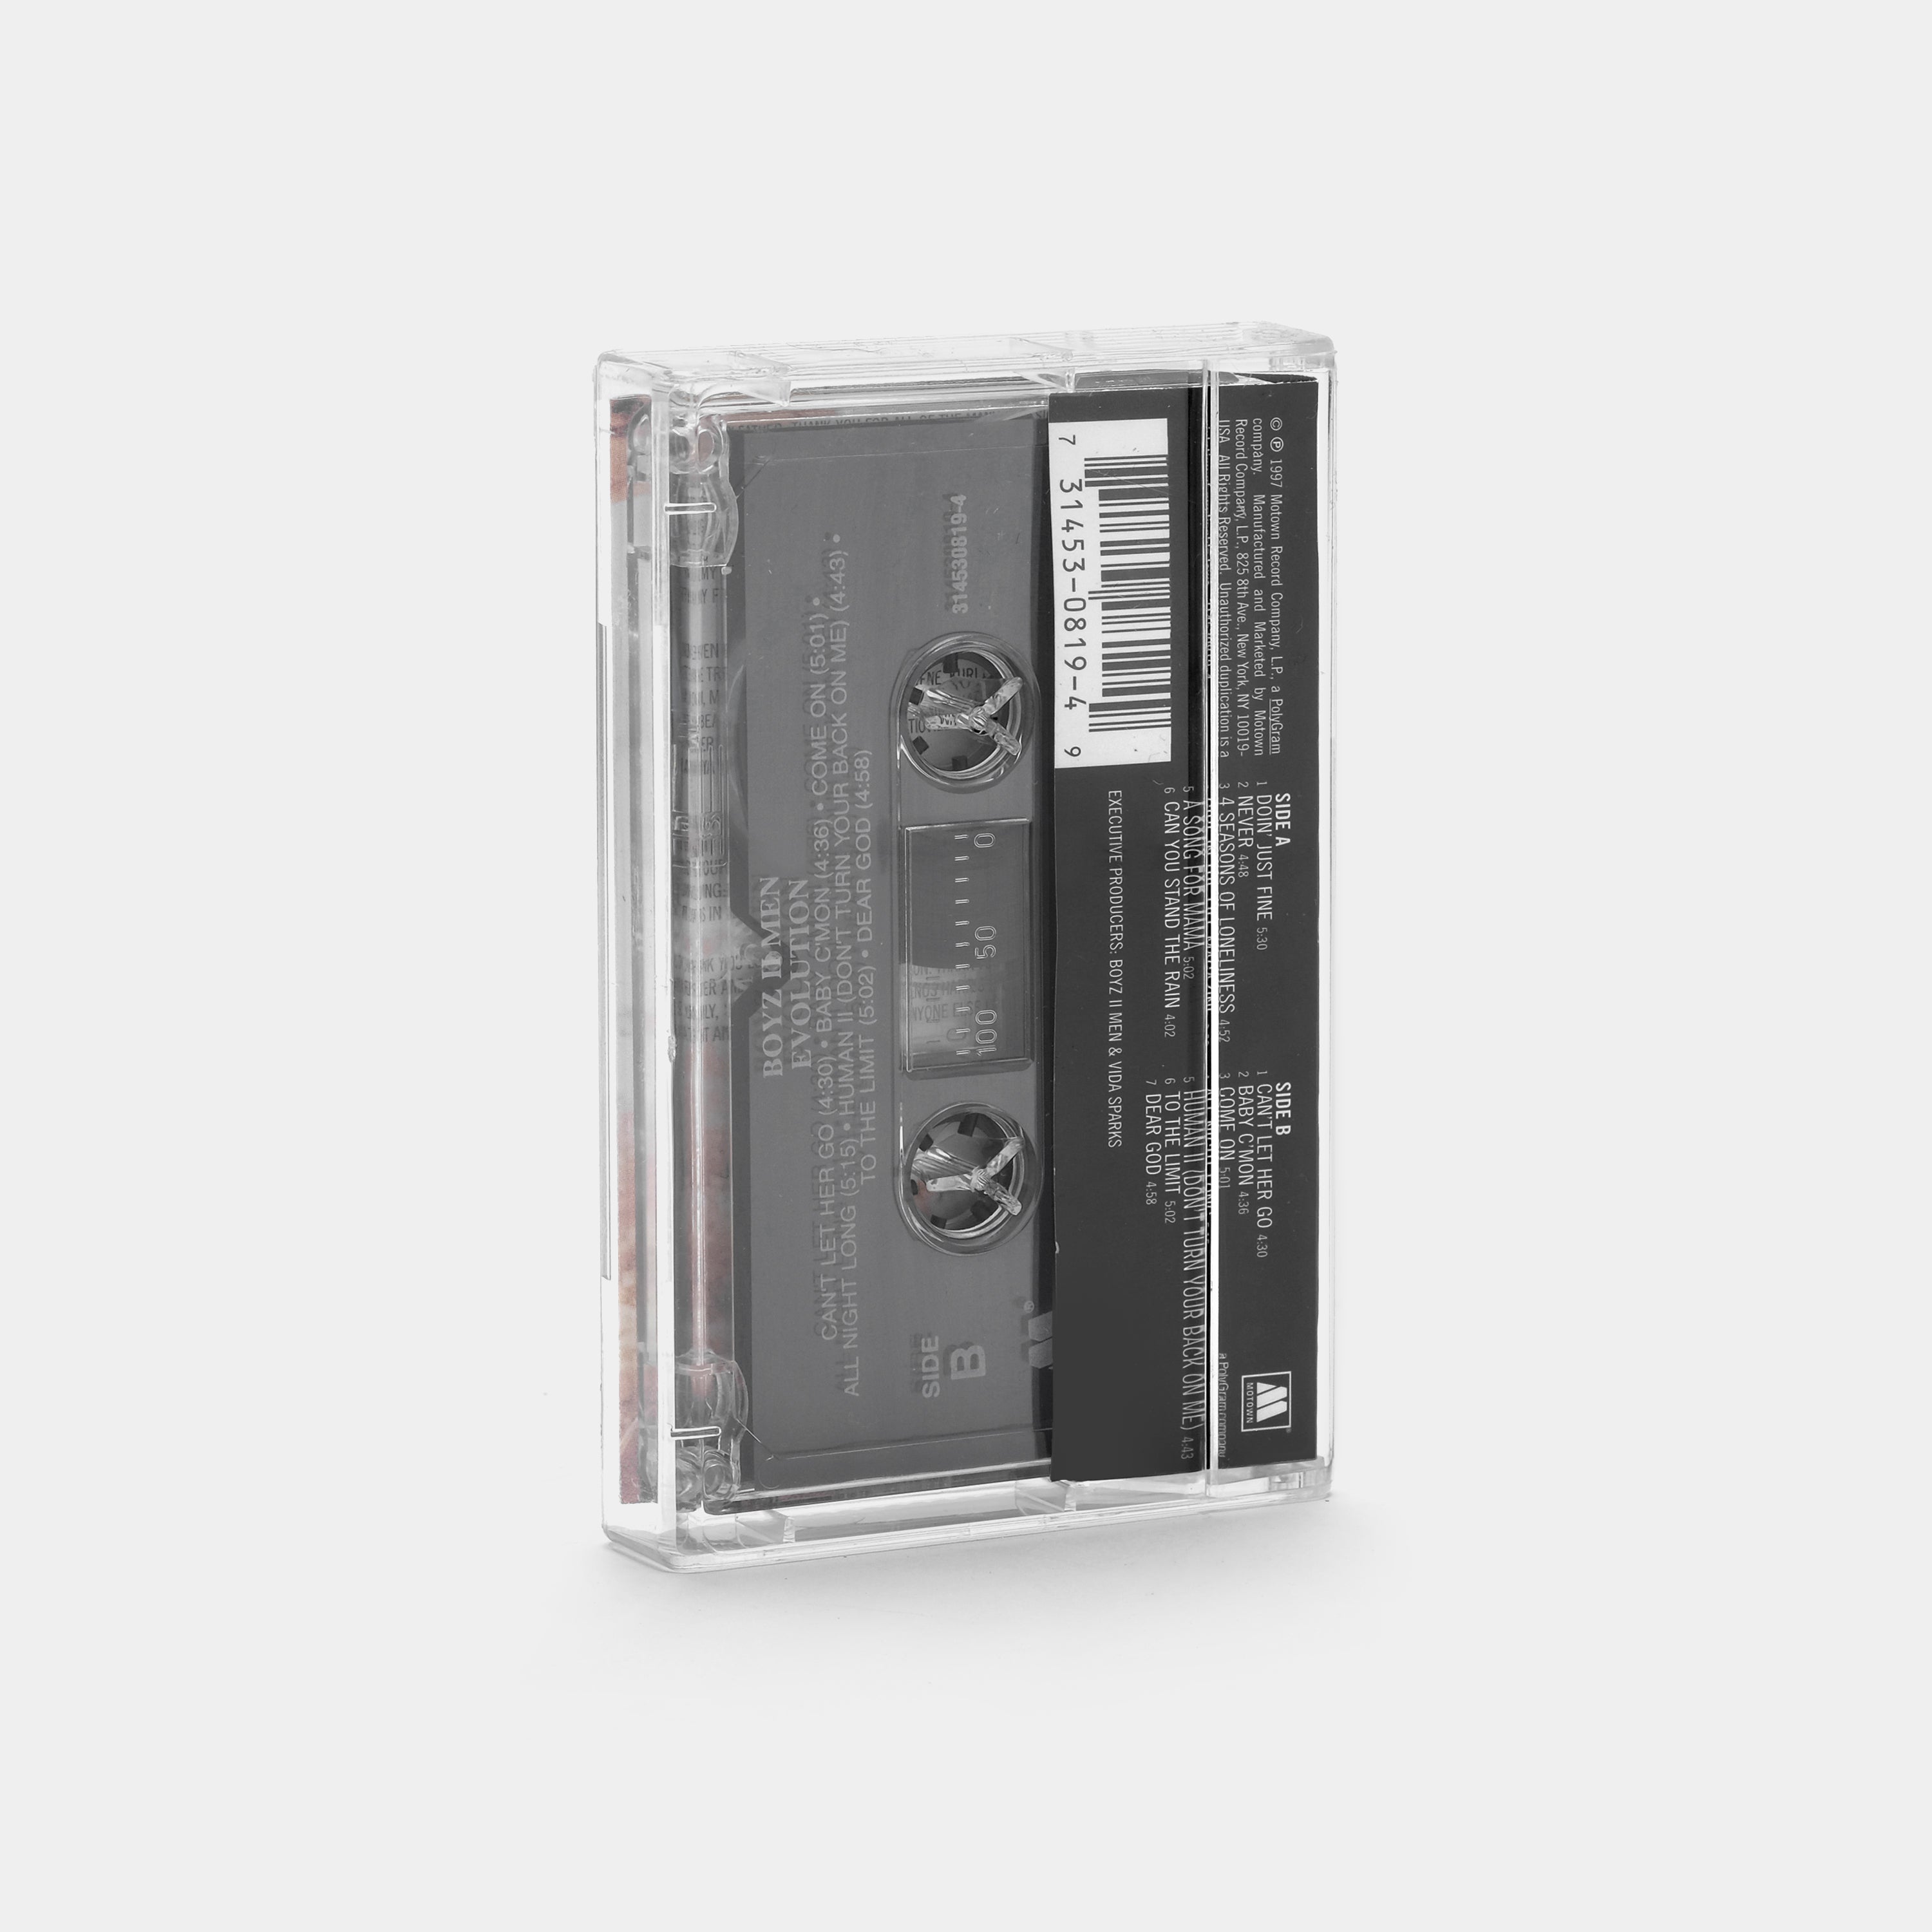 Boyz II Men - Evolution Cassette Tape